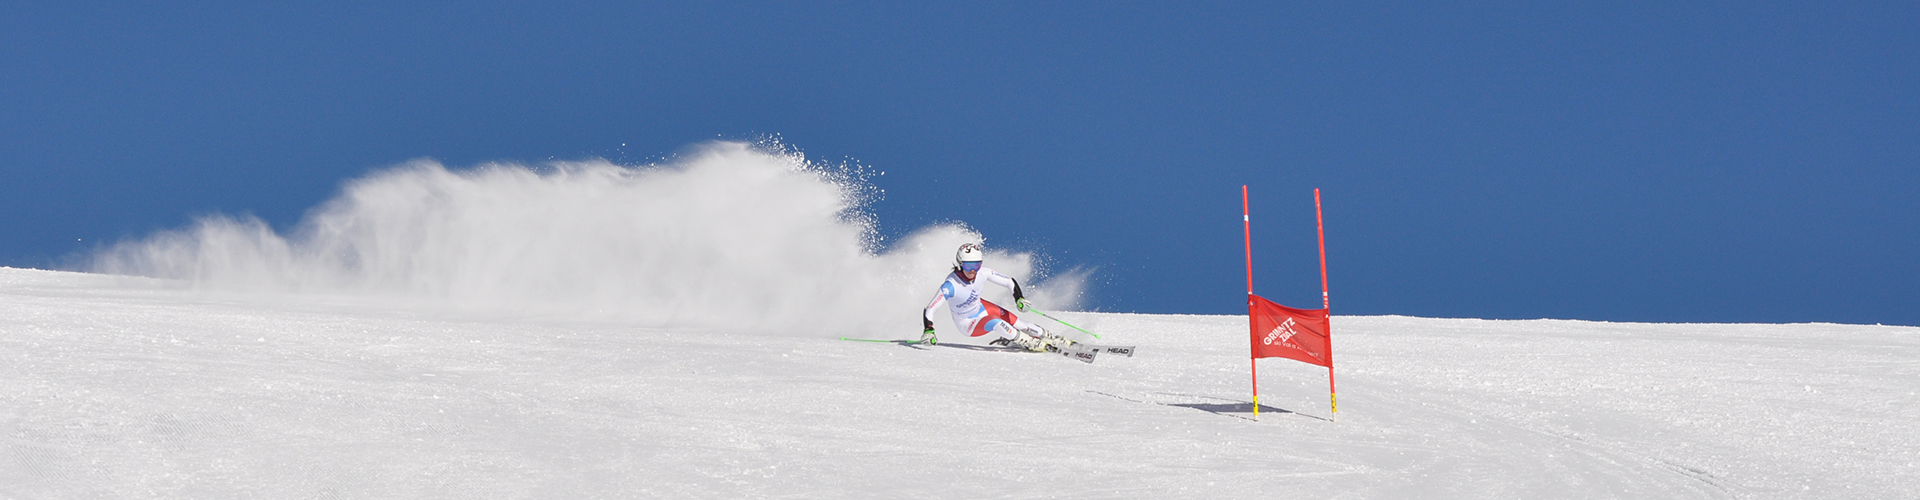 Camille Rast ski alpin géant Zinal